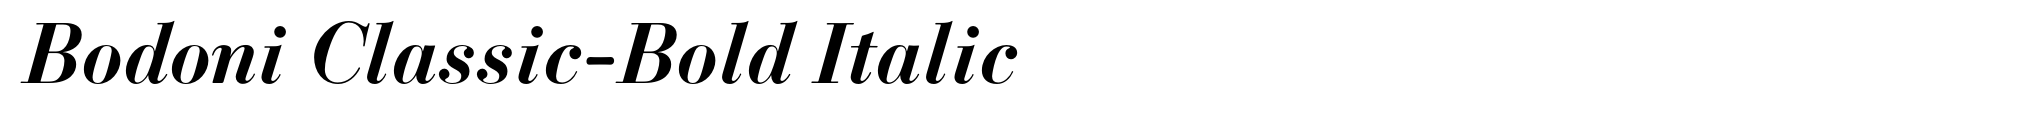 Bodoni Classic-Bold Italic image